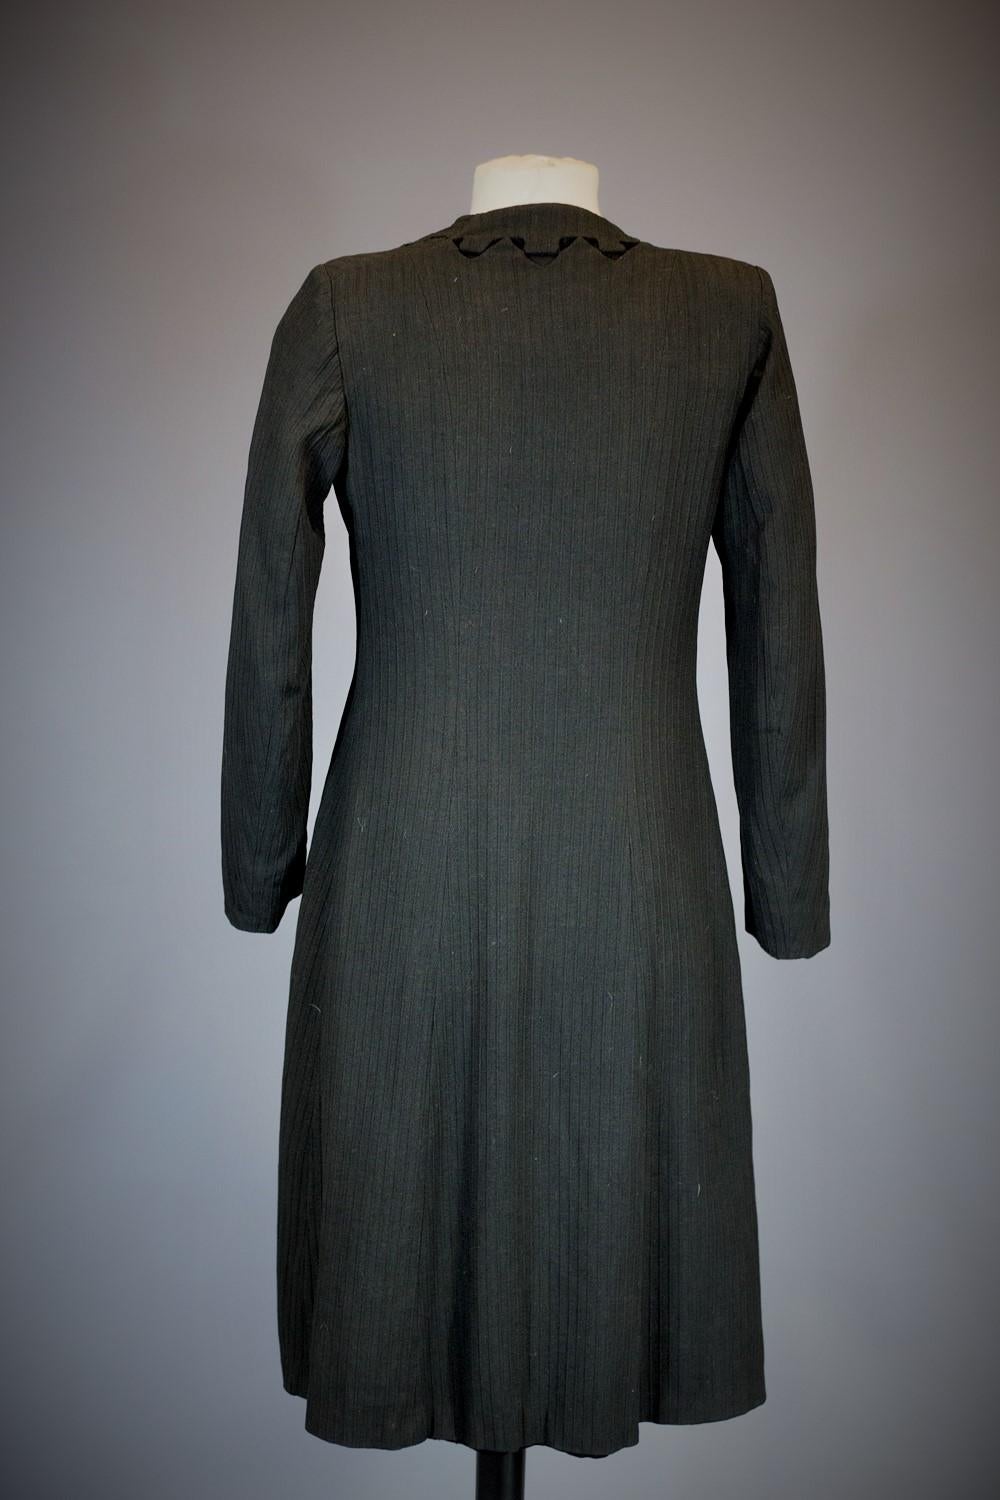 Women's Elegant Openwork Wool Crepe Evening Coat - France Circa 1935-1945 For Sale